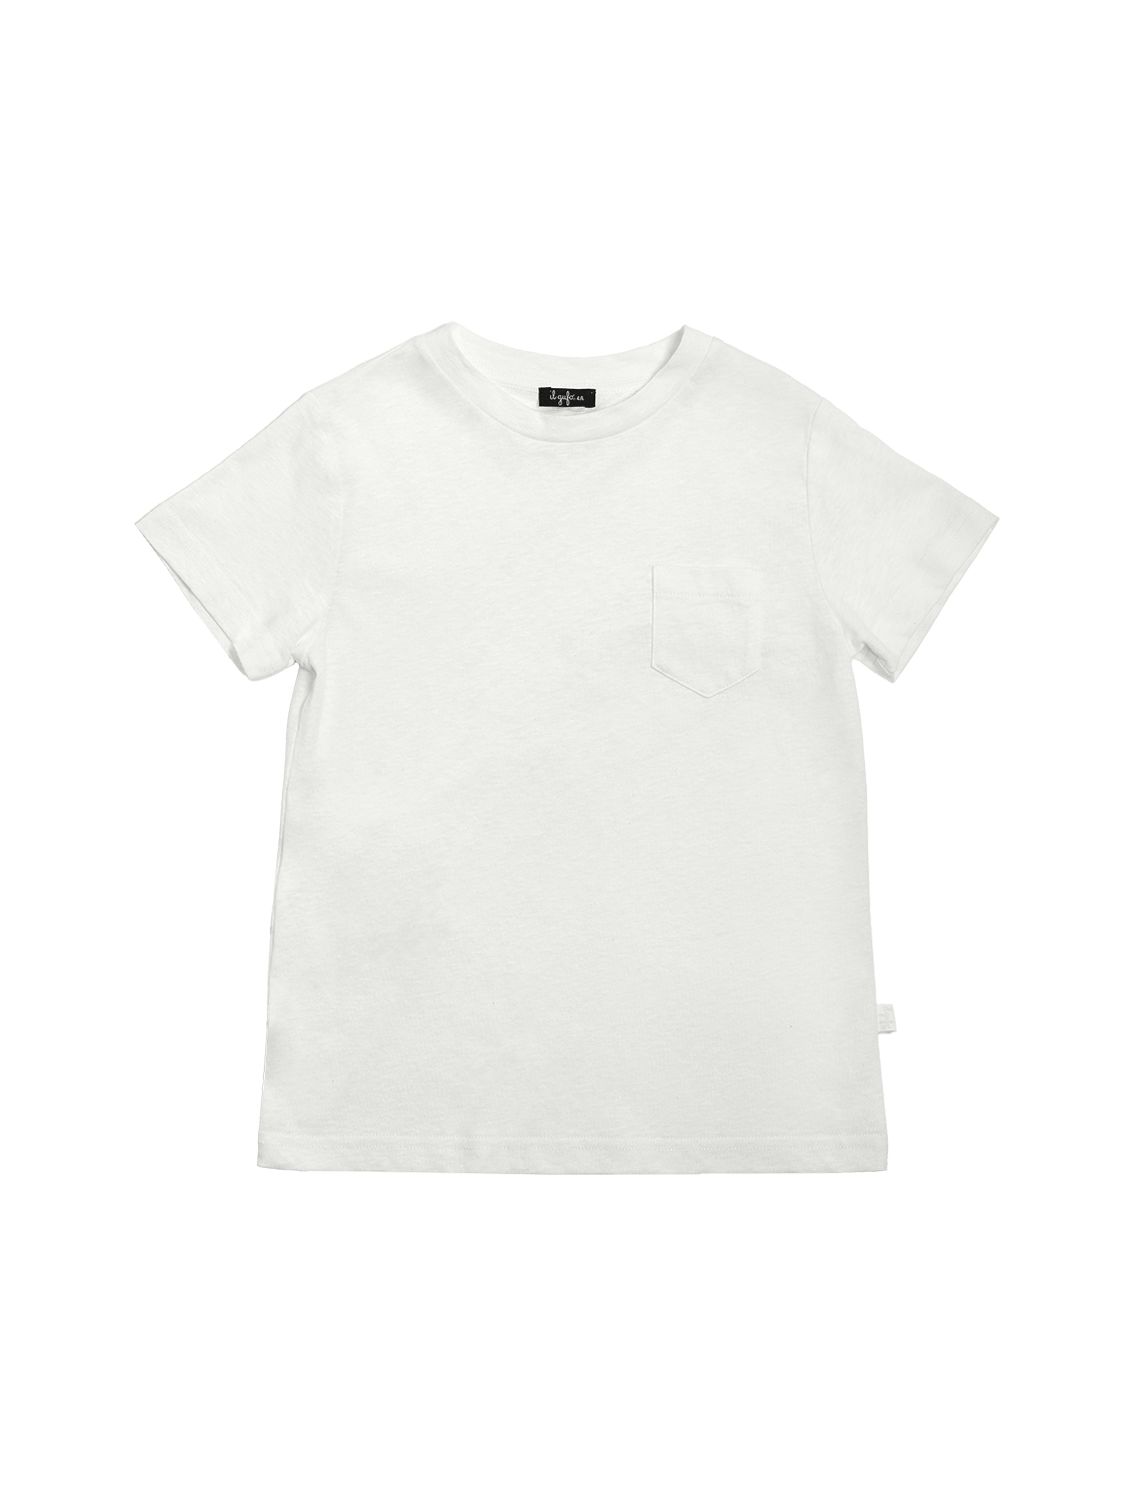 Image of Cotton & Linen T-shirt W/ Pocket